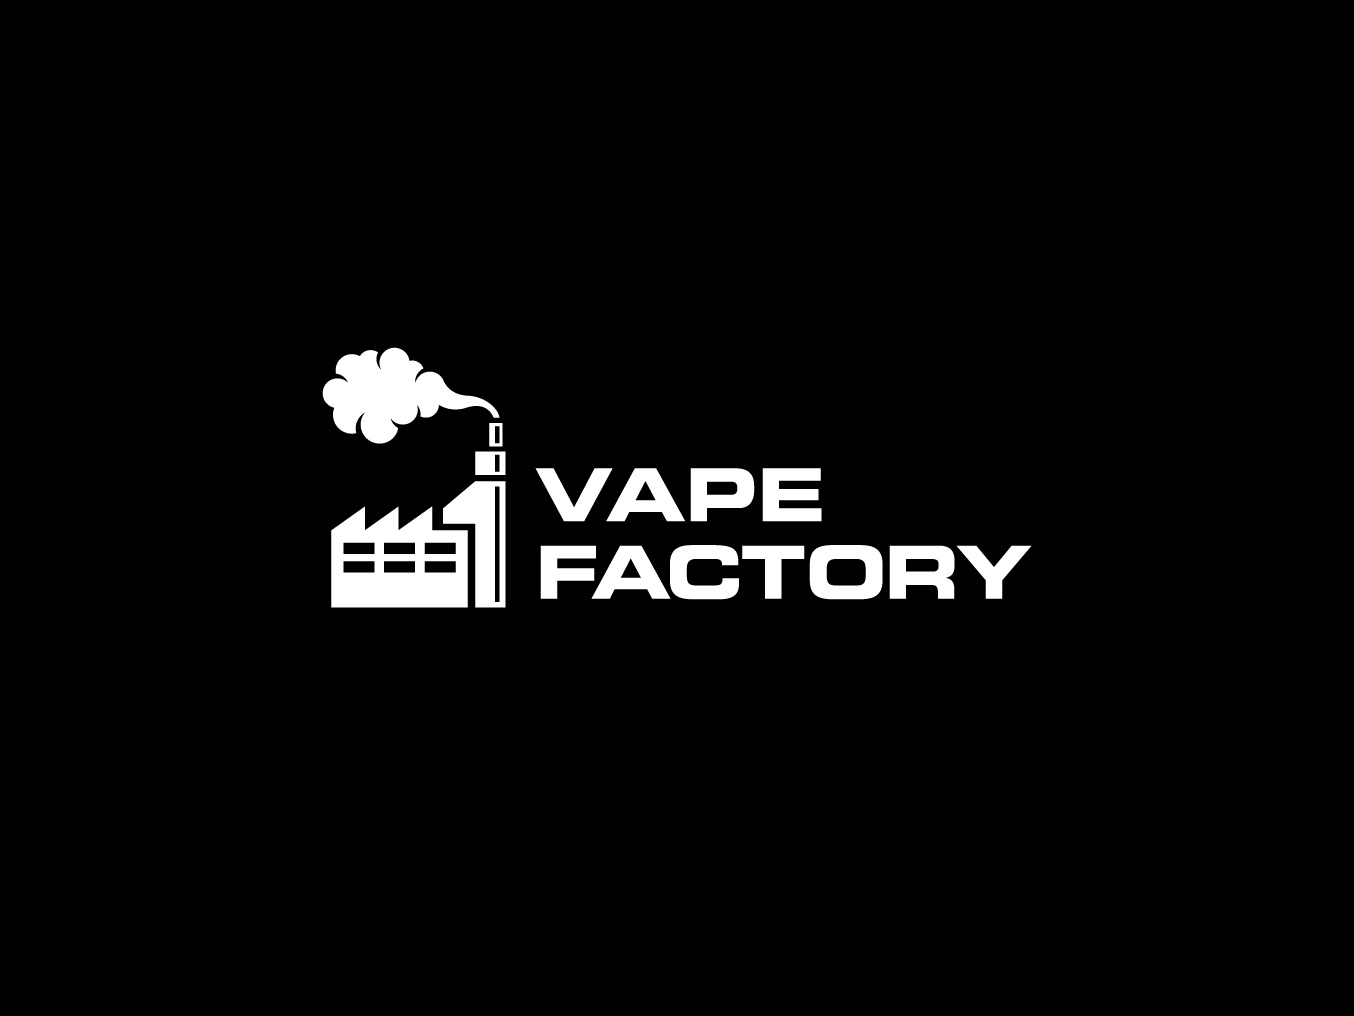 Smoker Logo - Logo Design - Vape Factory by SimplePixel on Dribbble